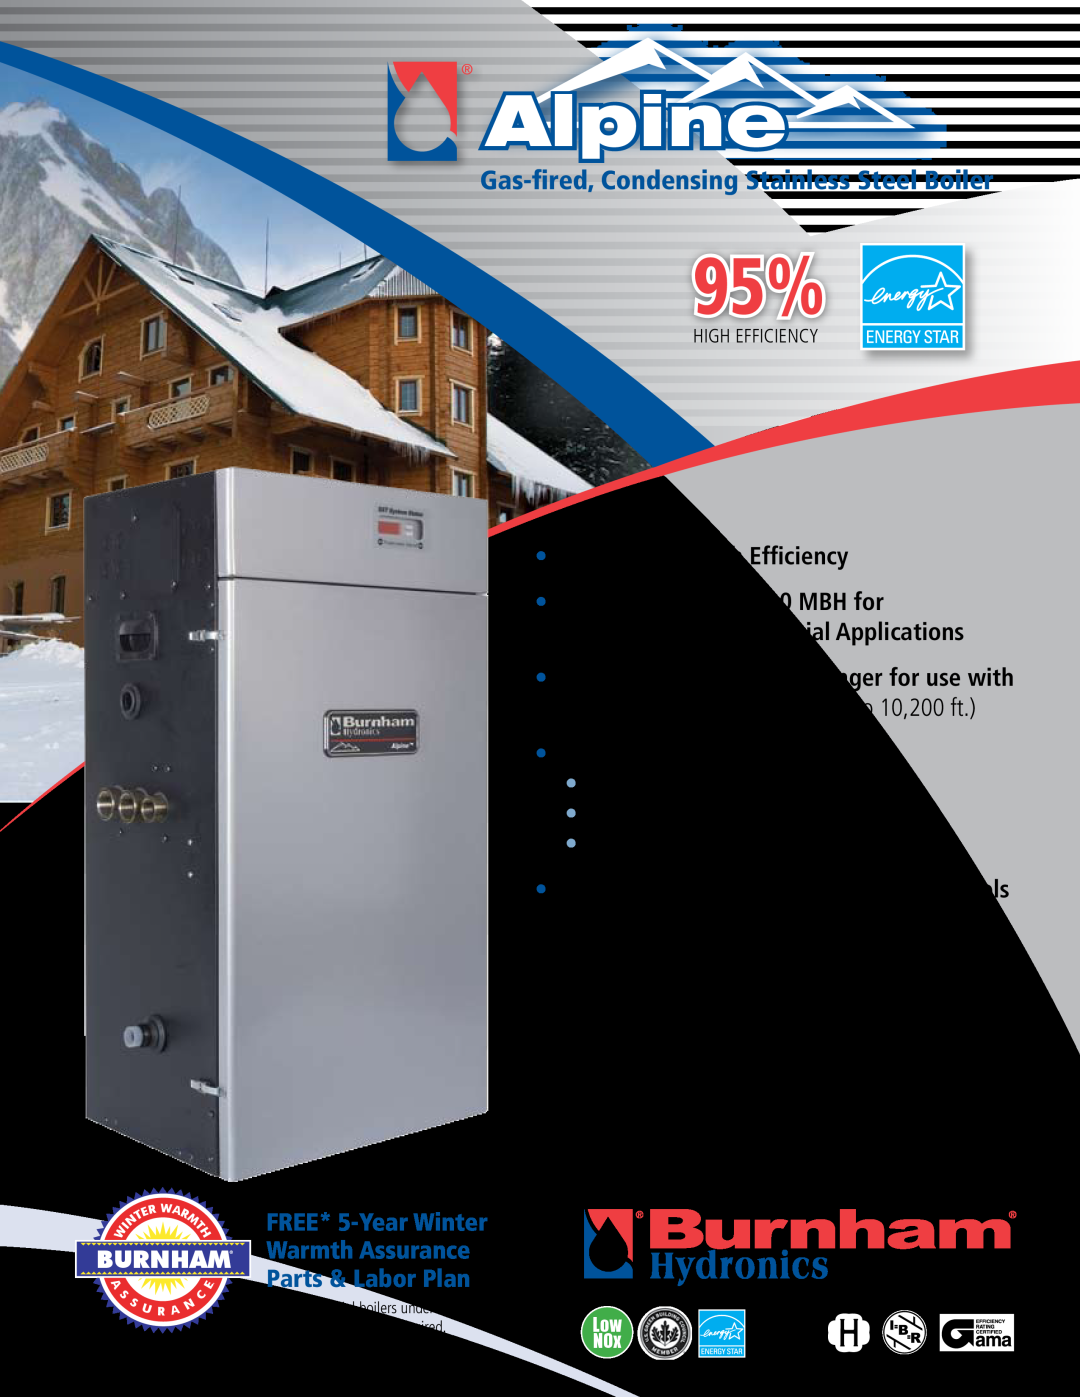 Burnham Gas-Fired manual Burnham, Alpine, Gas-fired, Condensing Stainless Steel Boiler, 95% AFUE - High Efficiency 